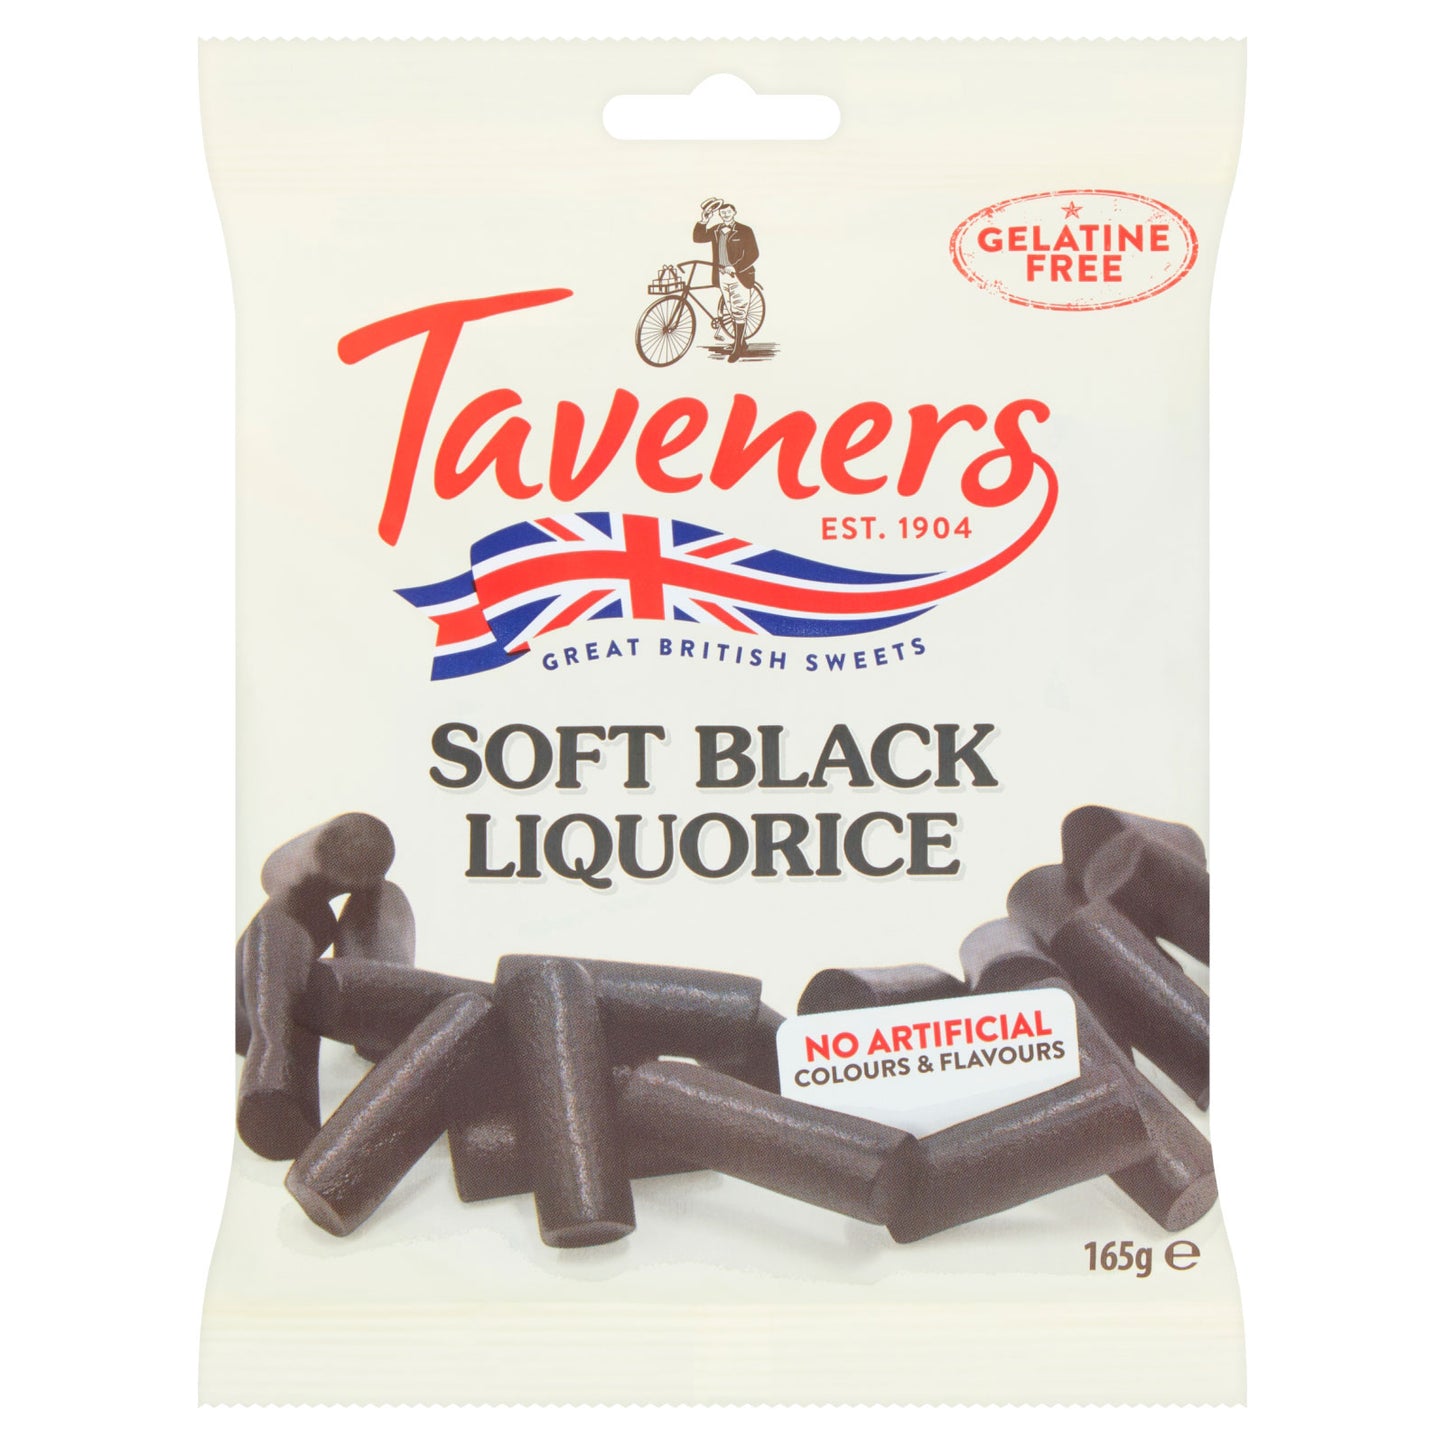 £1.65 Taveners Black Liquorice 165g (16)